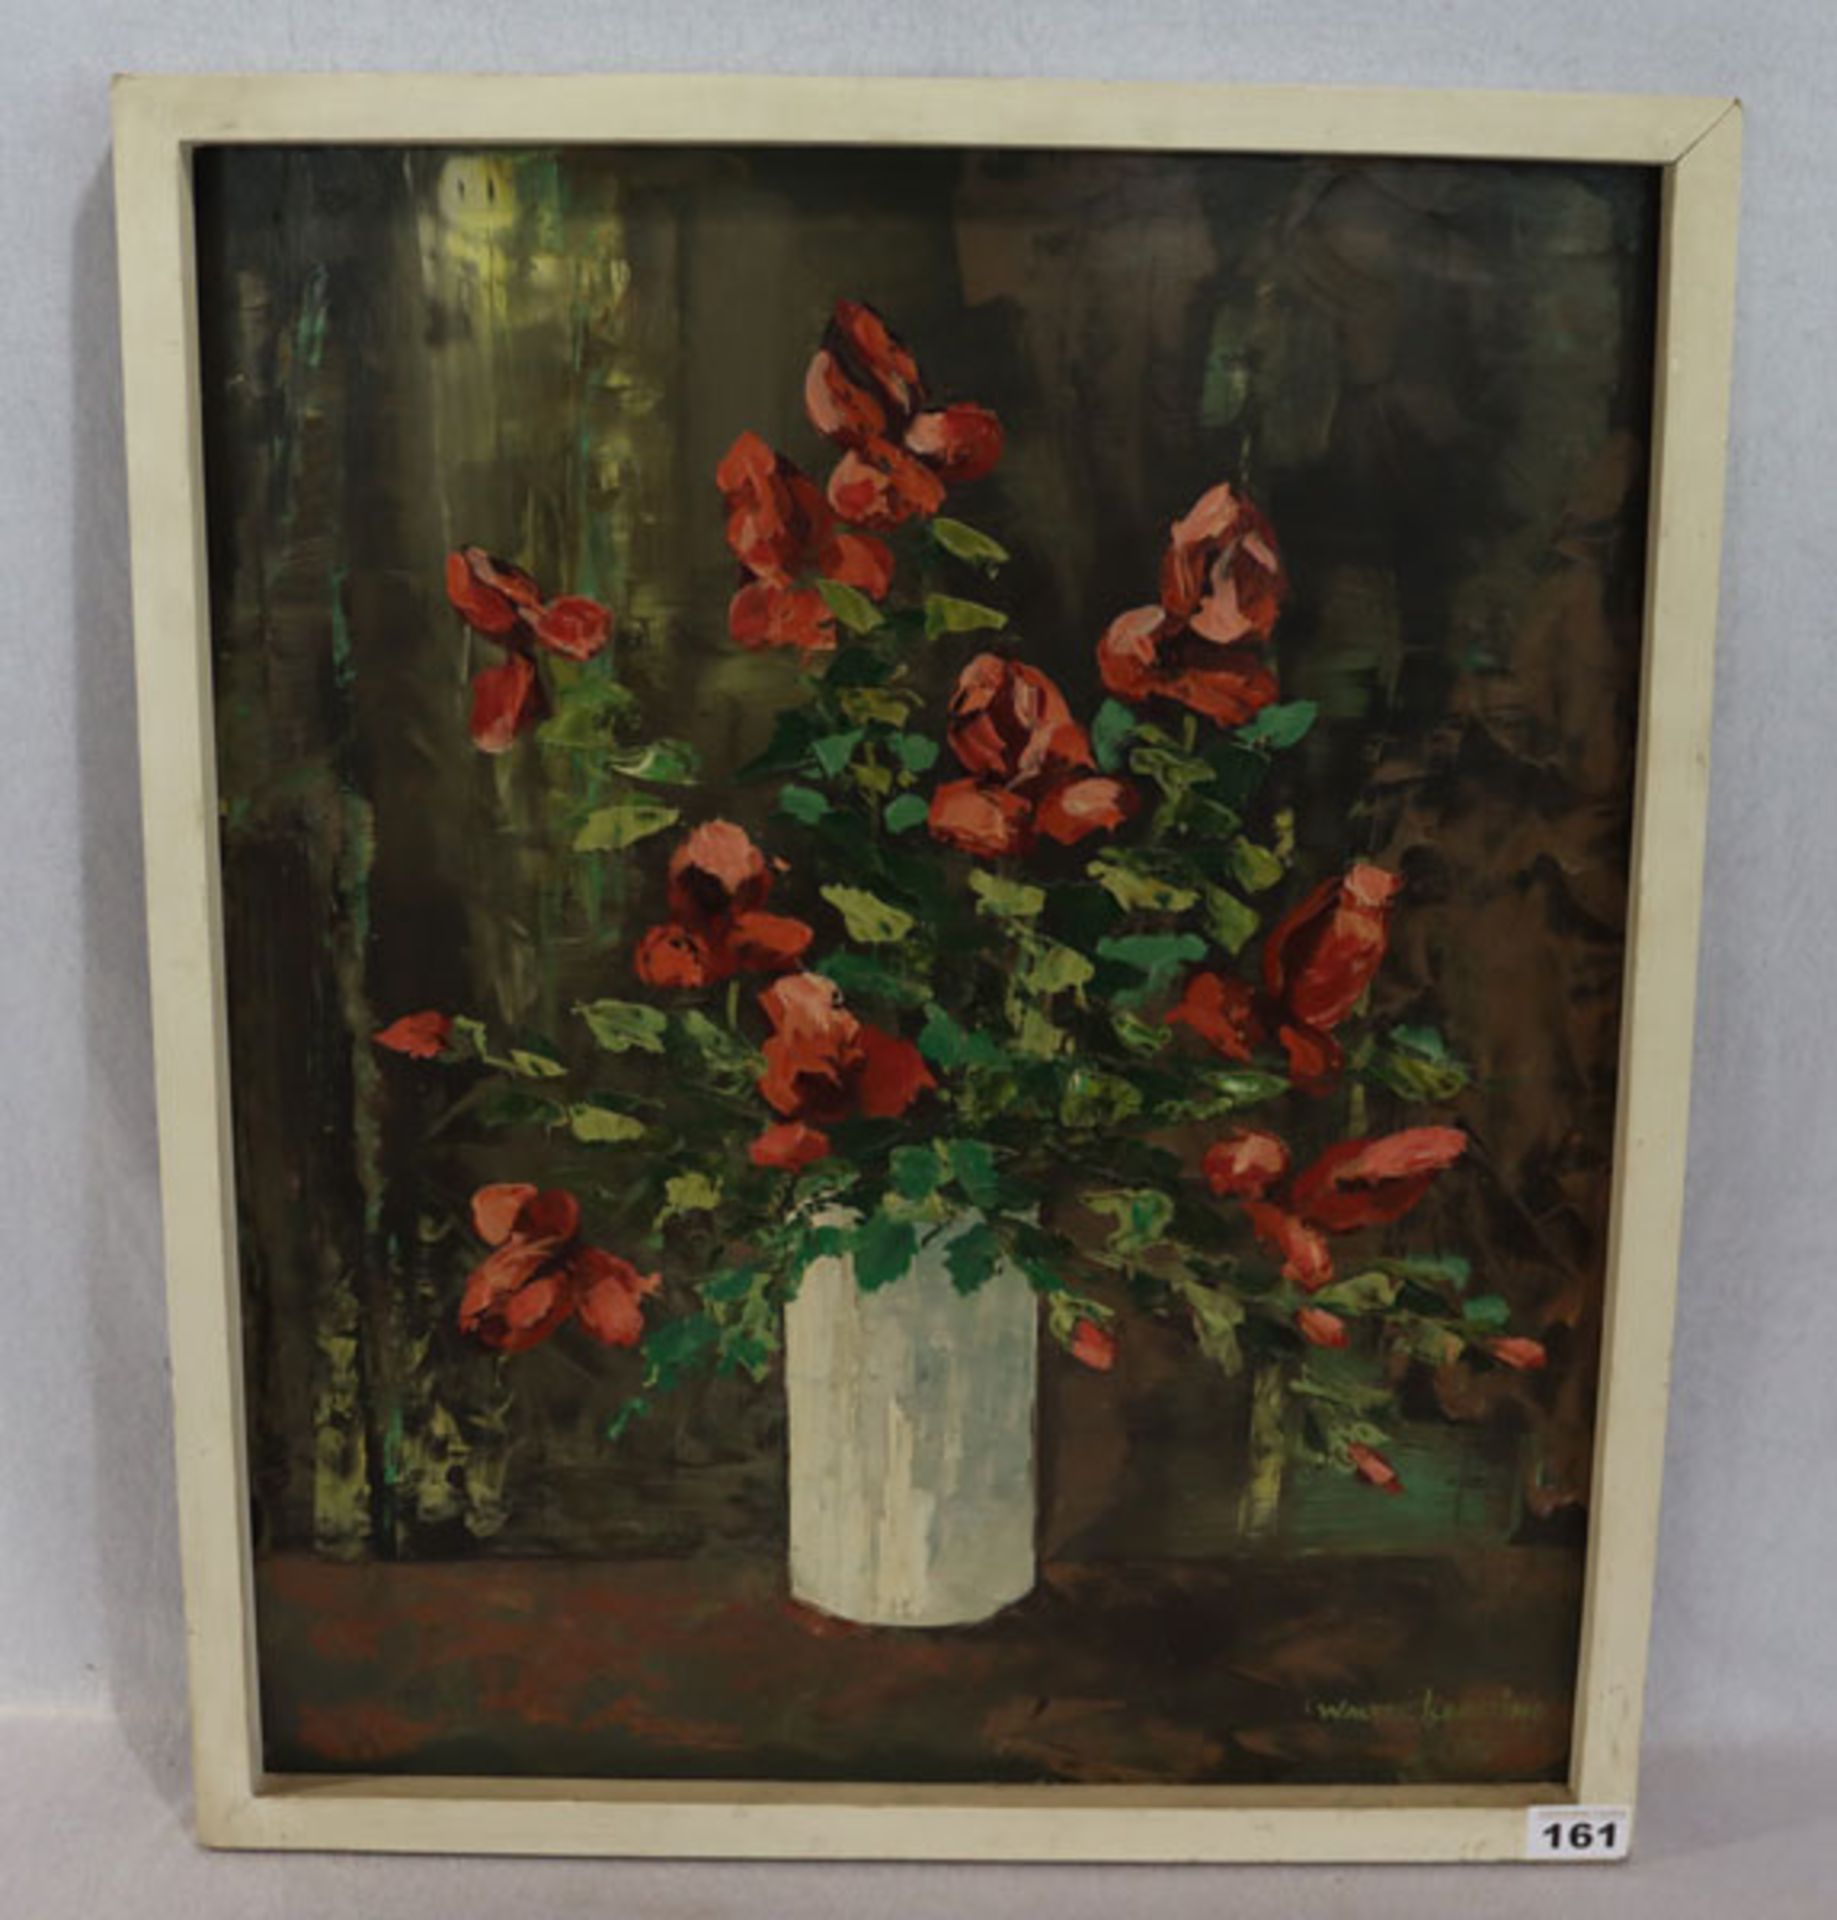 Gemälde ÖL/Hartfaser 'Blumen in Vase', signiert Walter Kersting, 63 ?, gerahmt, Rahmen bestossen,